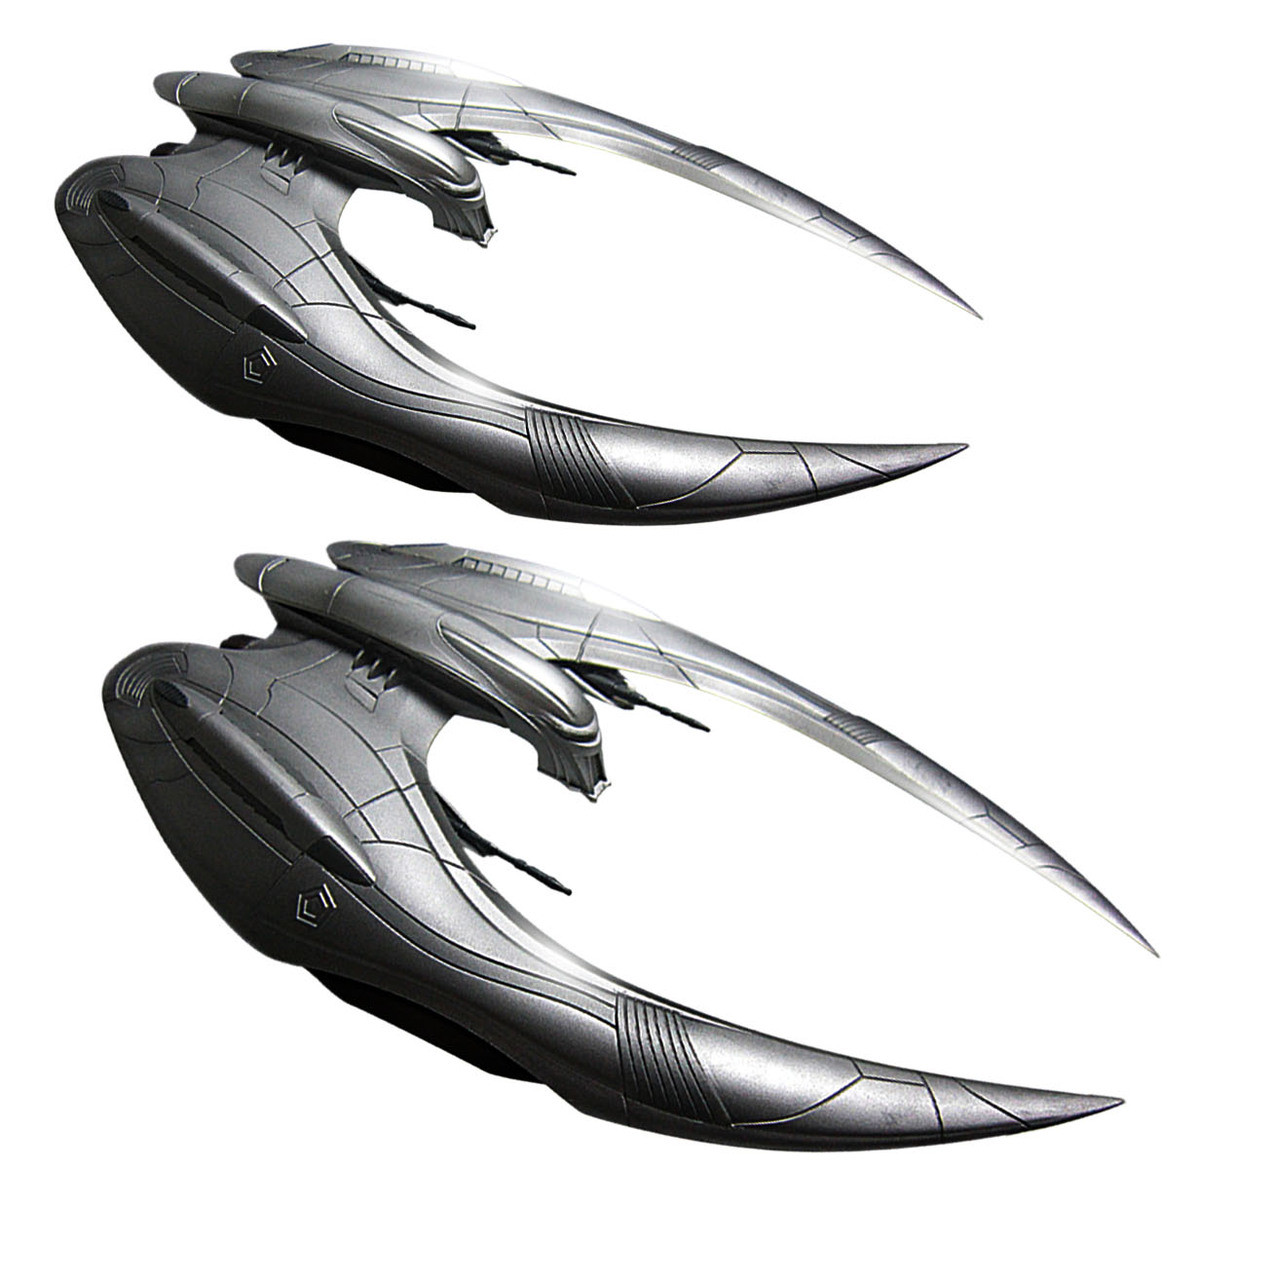 Moebius Models Battlestar Galactica Cylon Raider 1/72 Scale Kit # 959 for sale online 